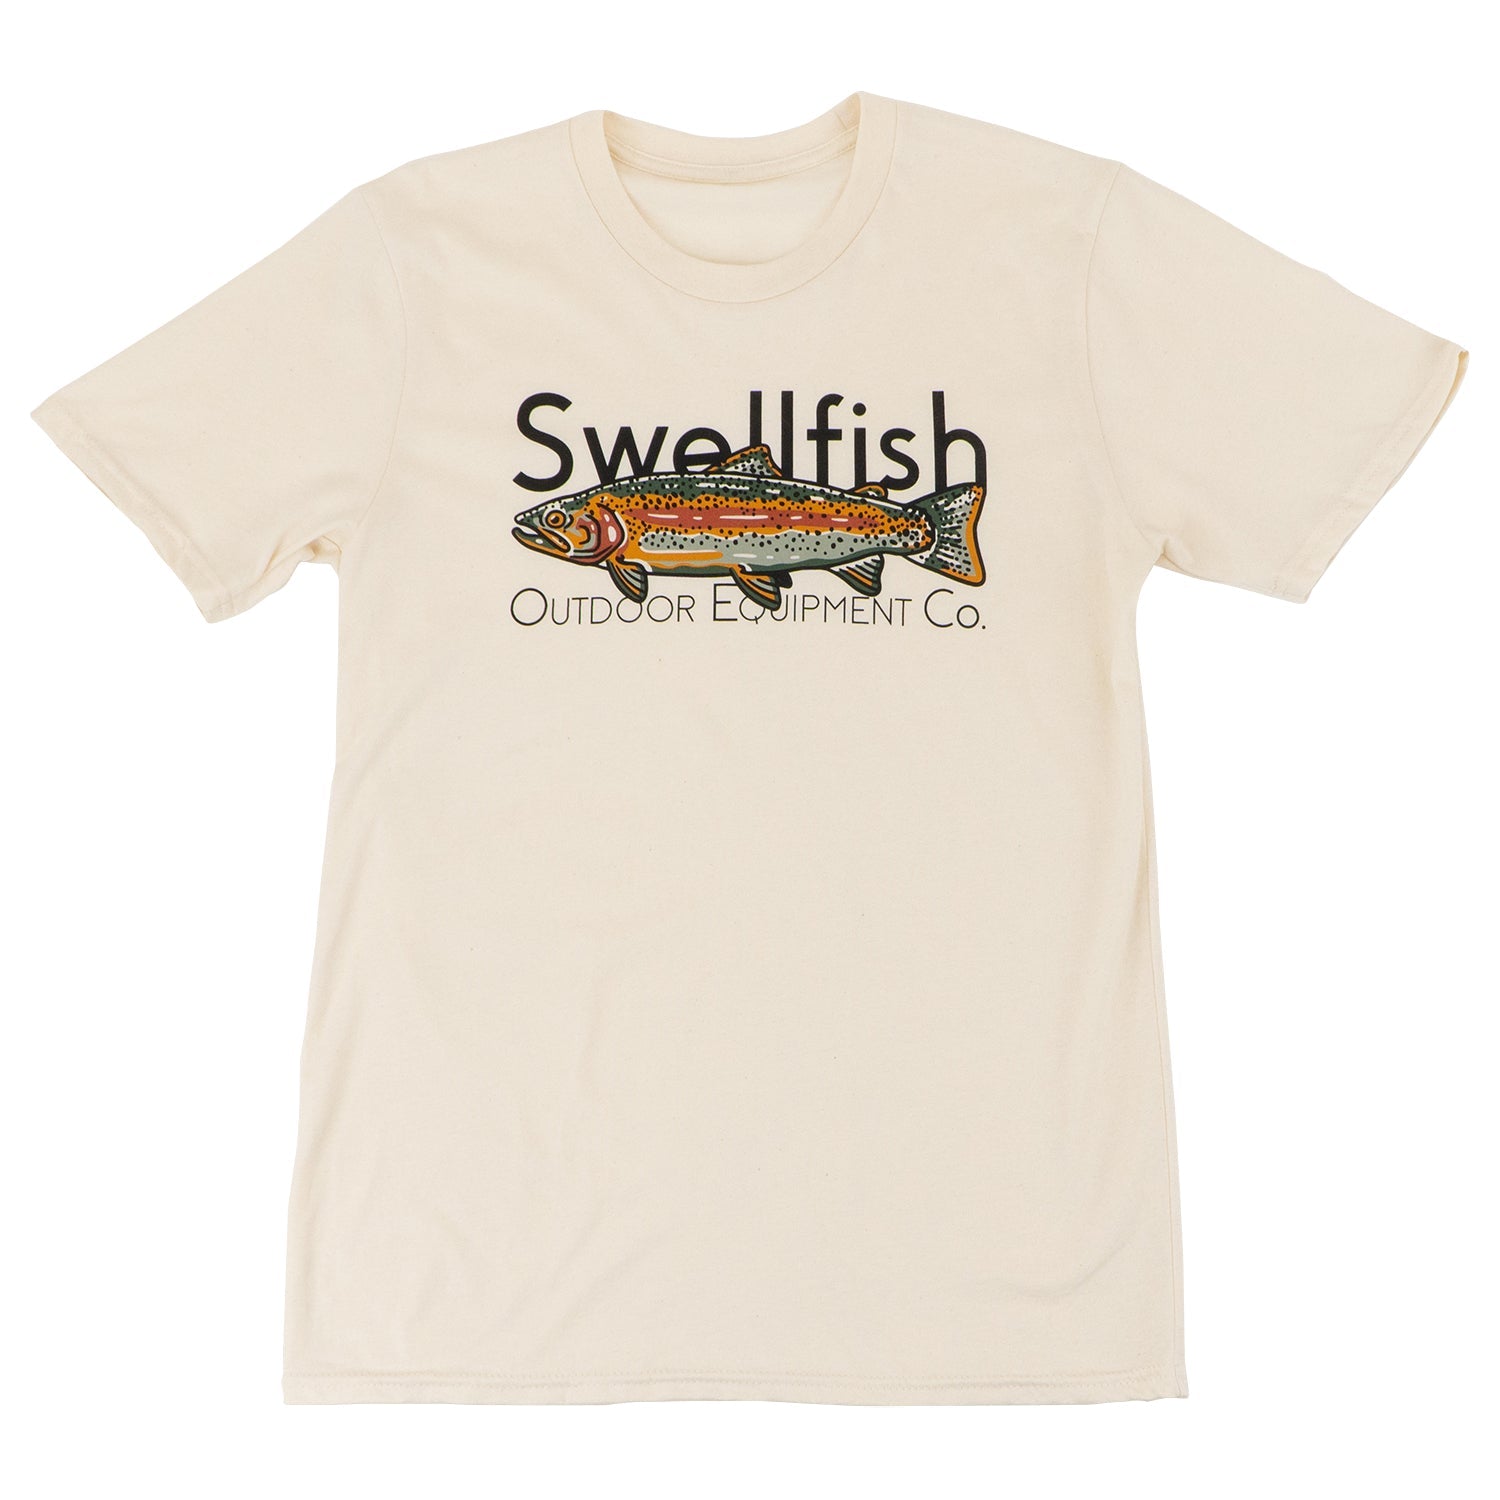 Salmon Short Sleeve Tee - Swellfish Outdoor Equipment Co.